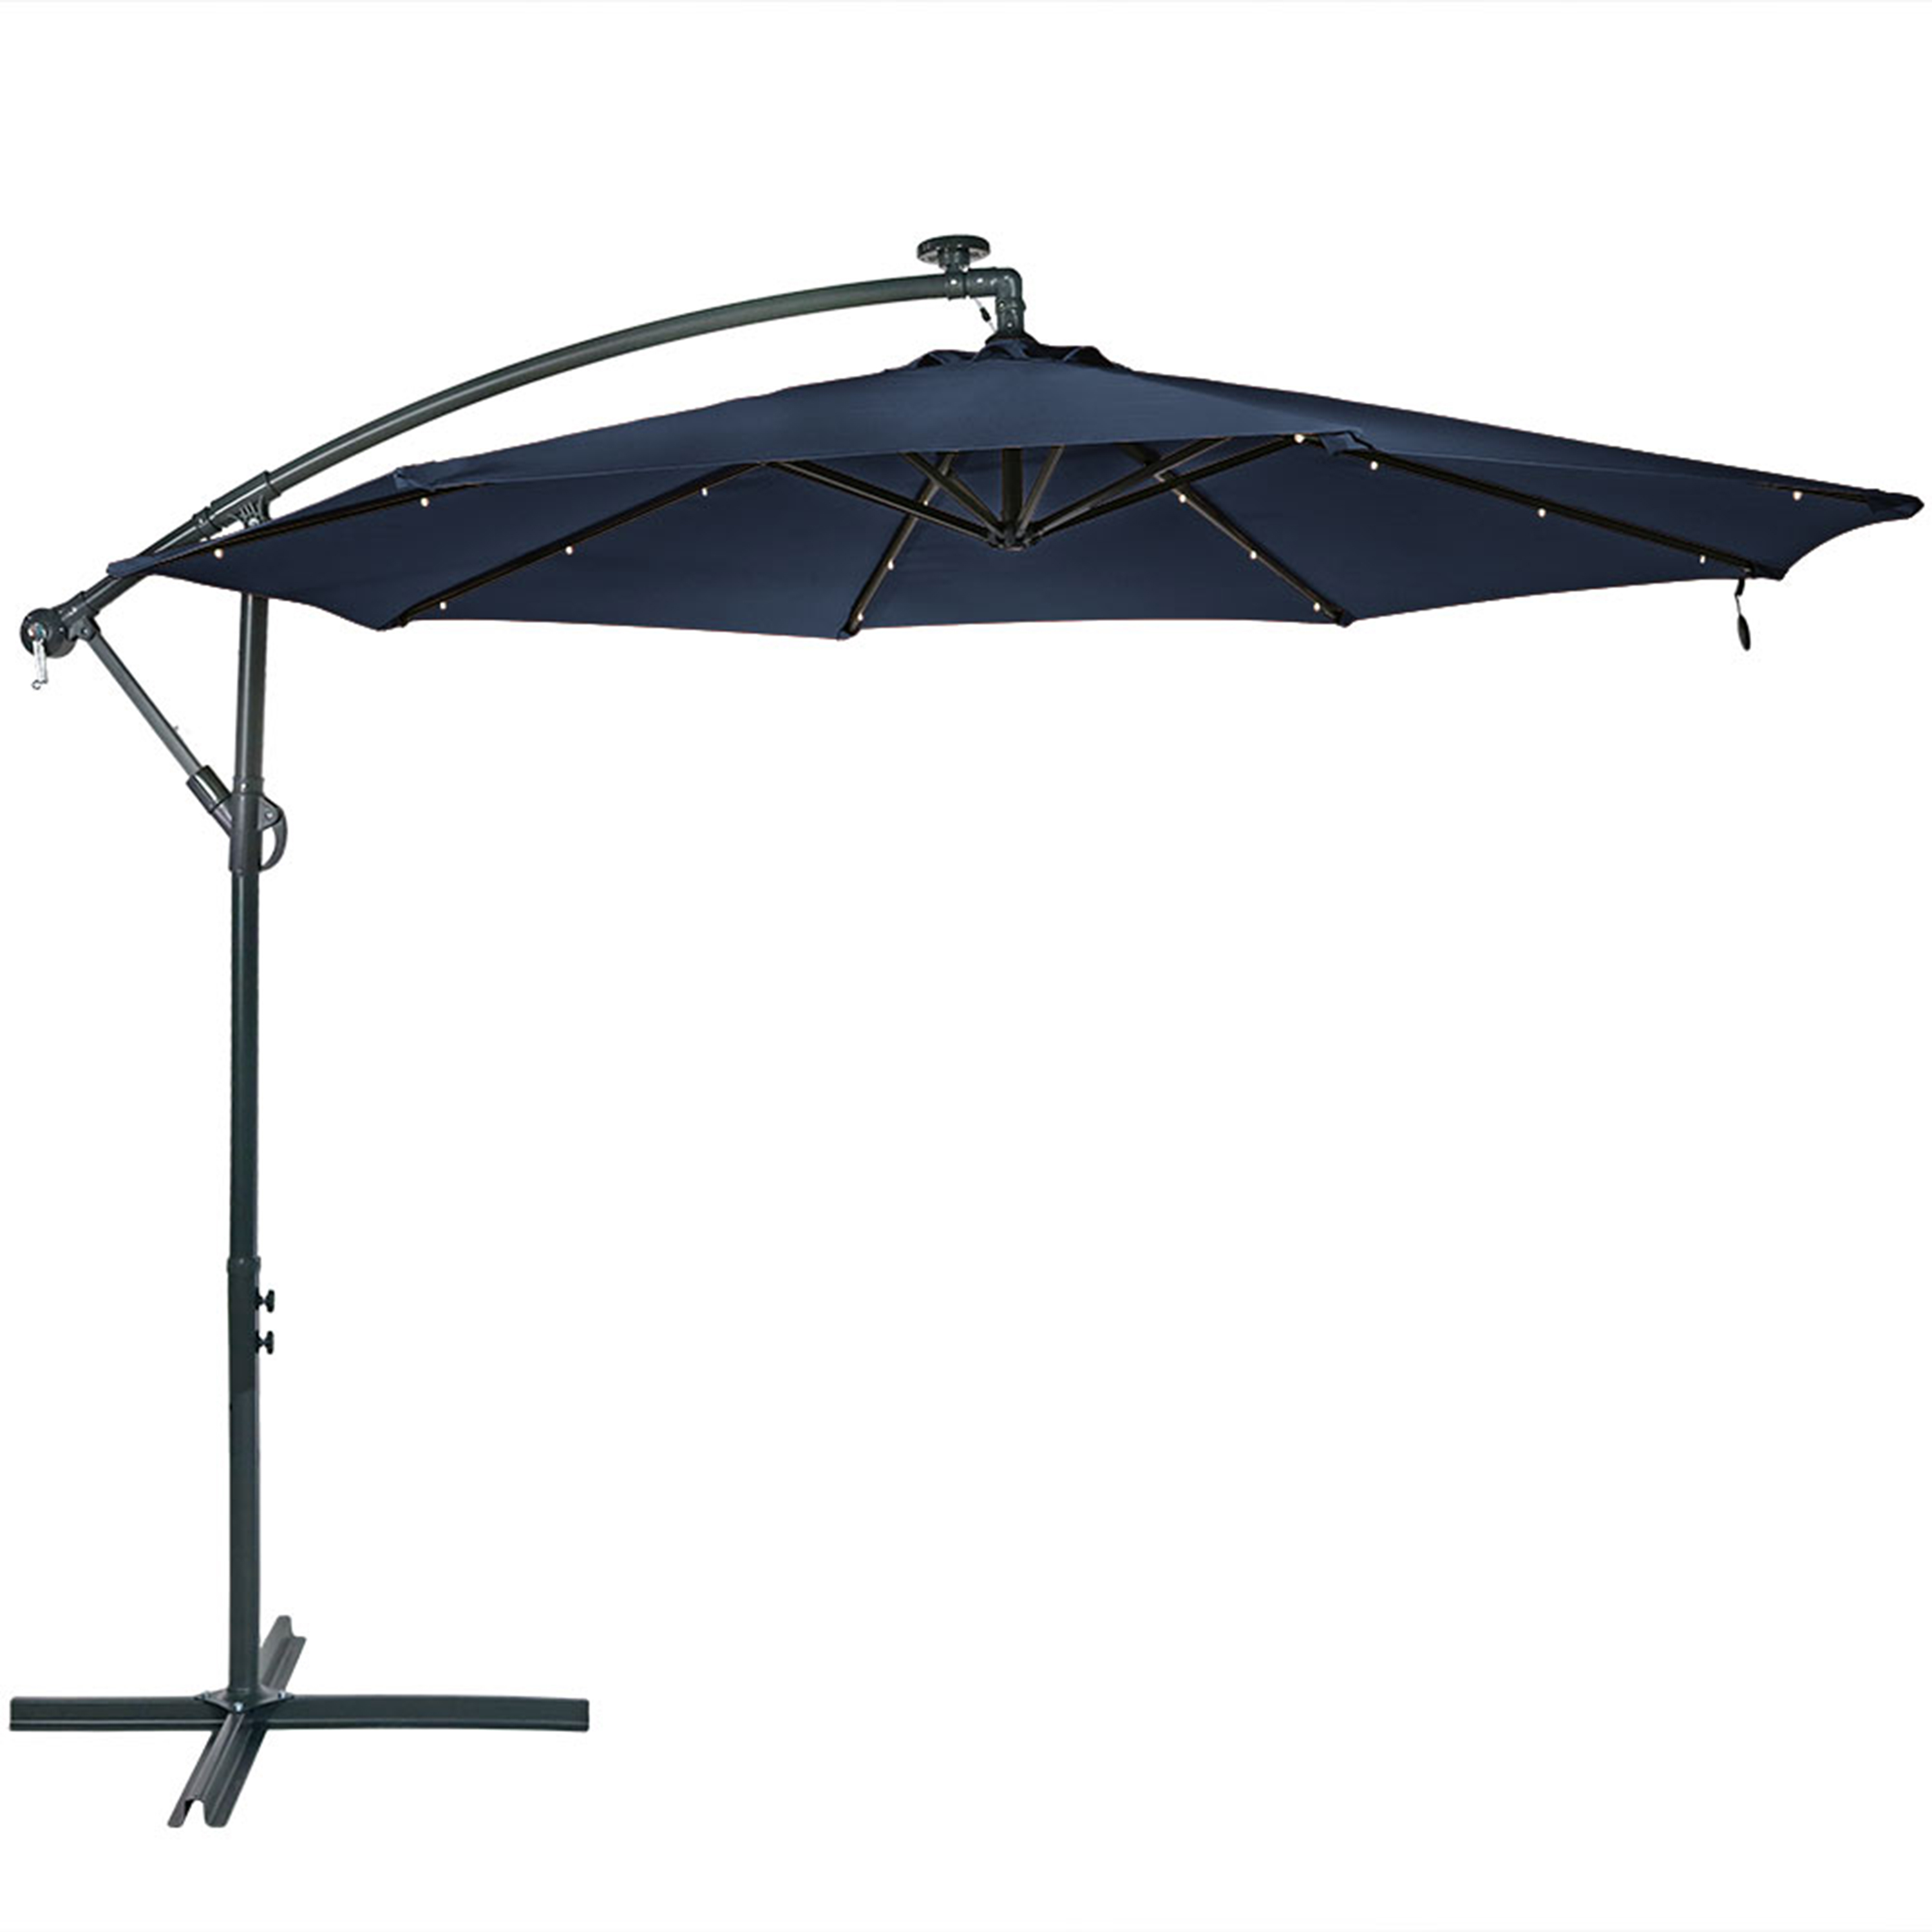 Sunnydaze Solar LED 10-Foot Offset Patio Umbrella with Cantilever, Crank, and Cross Base, Navy Blue